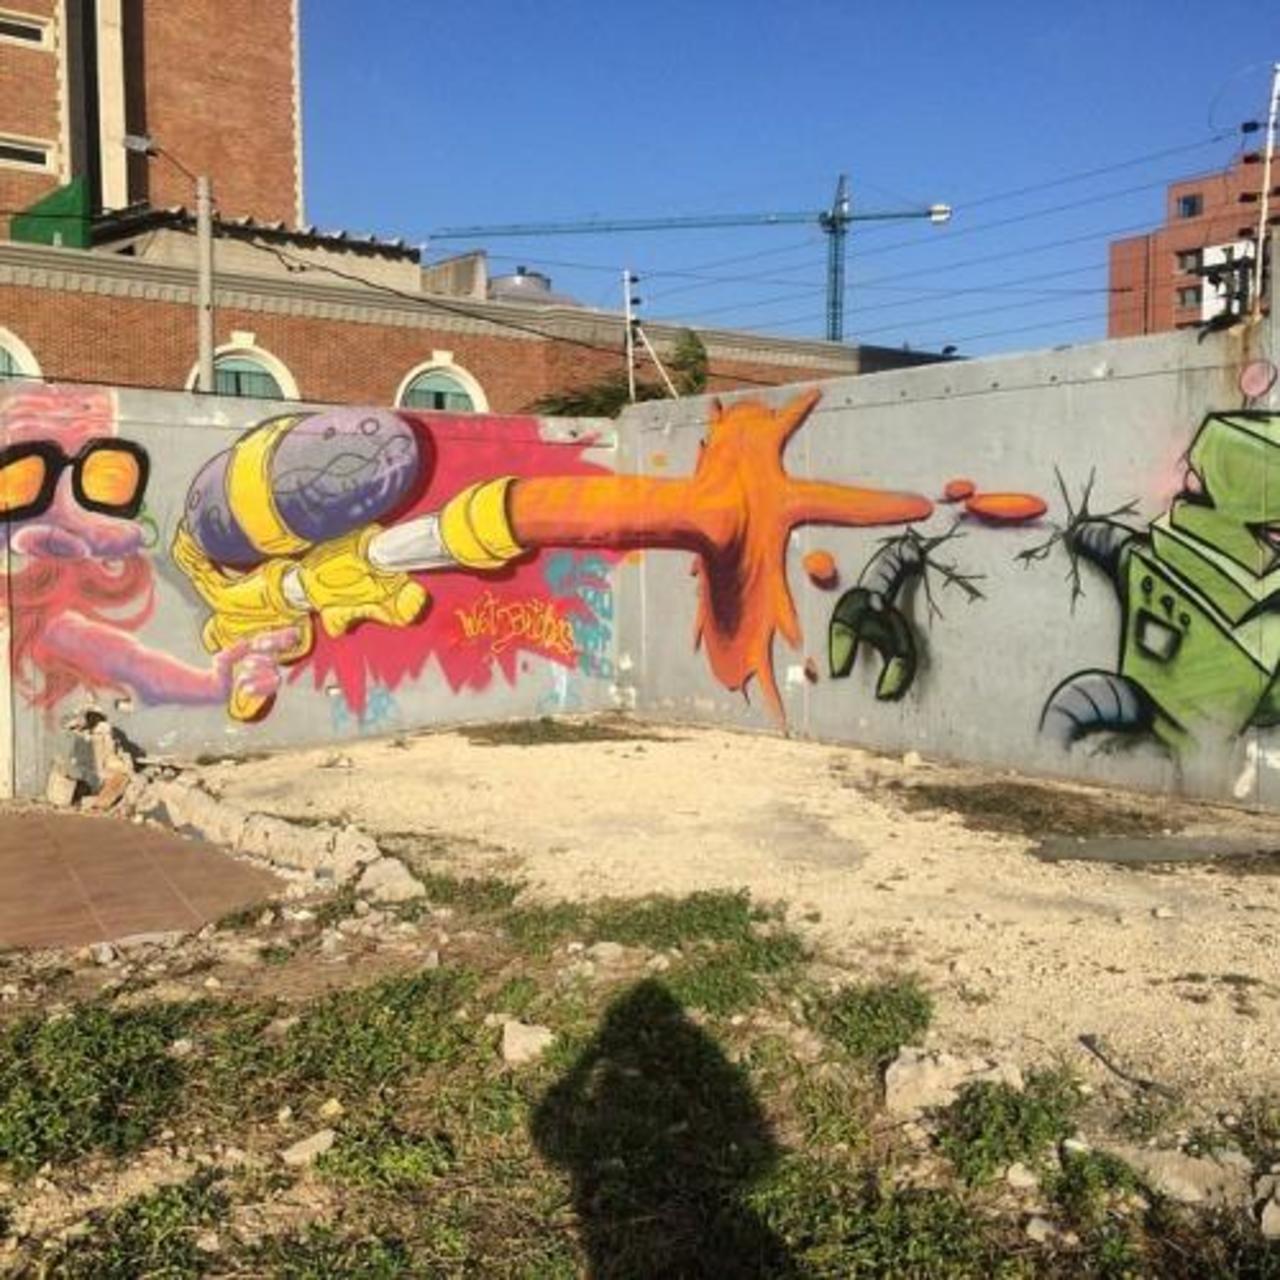 Wanted to share this piece of awesomeness#Lazer #robot #streetart #urban #mural #graffiti … http://ift.tt/1AiE0oQ http://t.co/kUH6SA1PYK